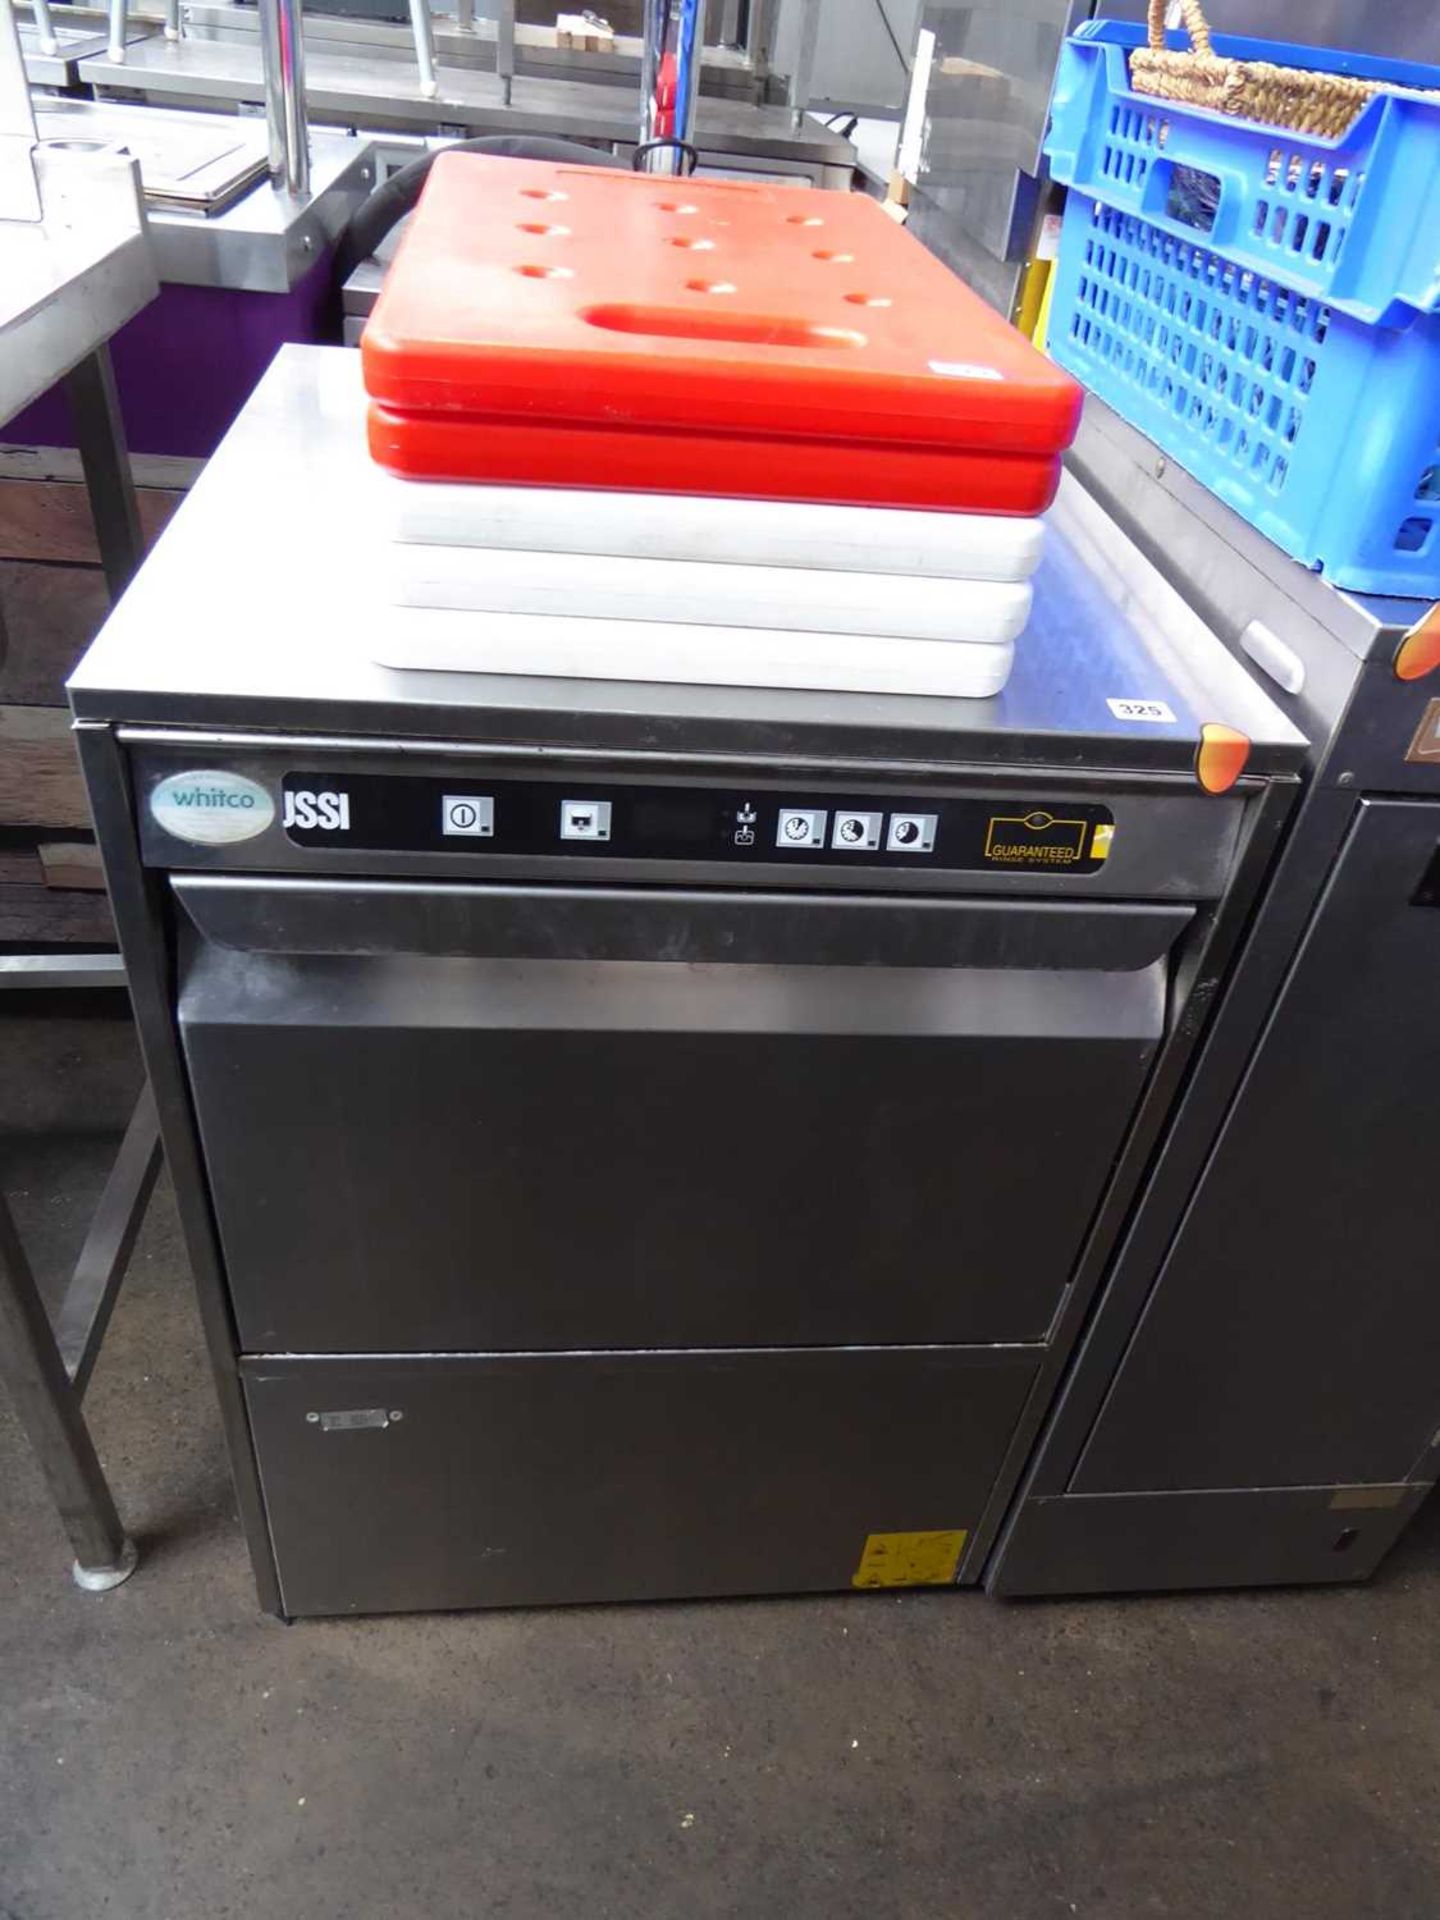 60cm Zanussi under counter drop front dishwasher